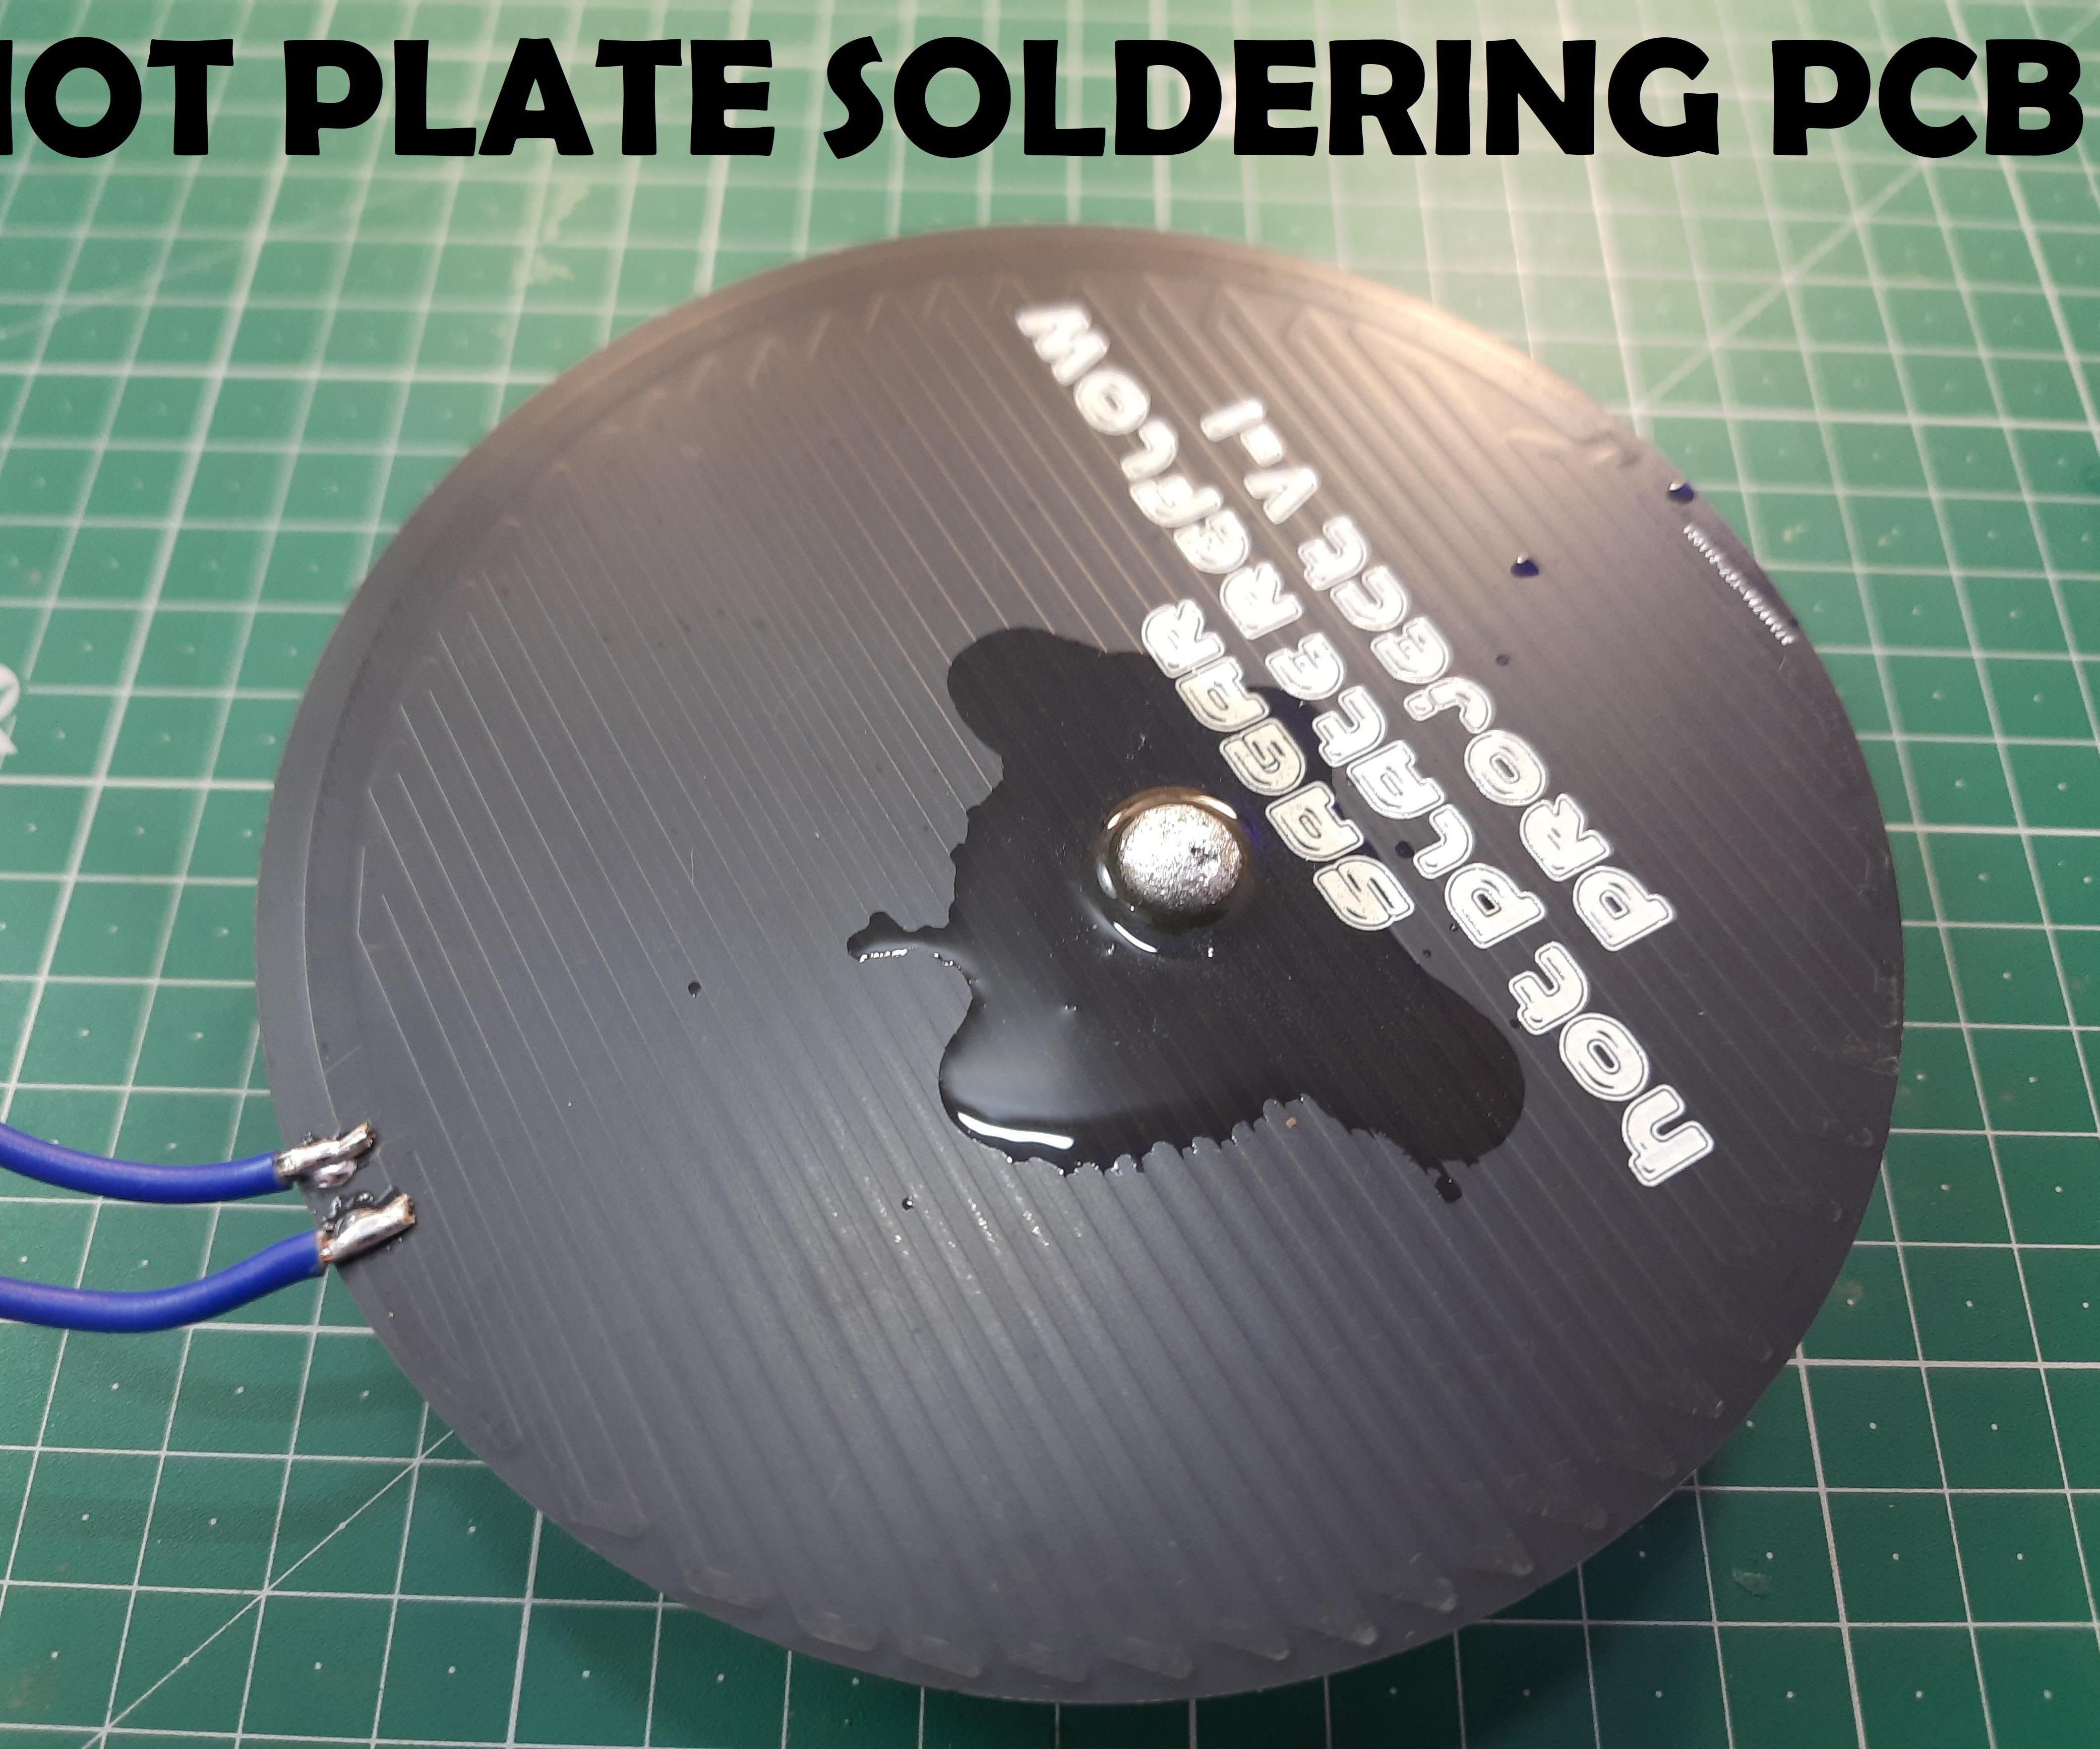 PCB Soldering Reflow Hot Plate! a Good Idea?